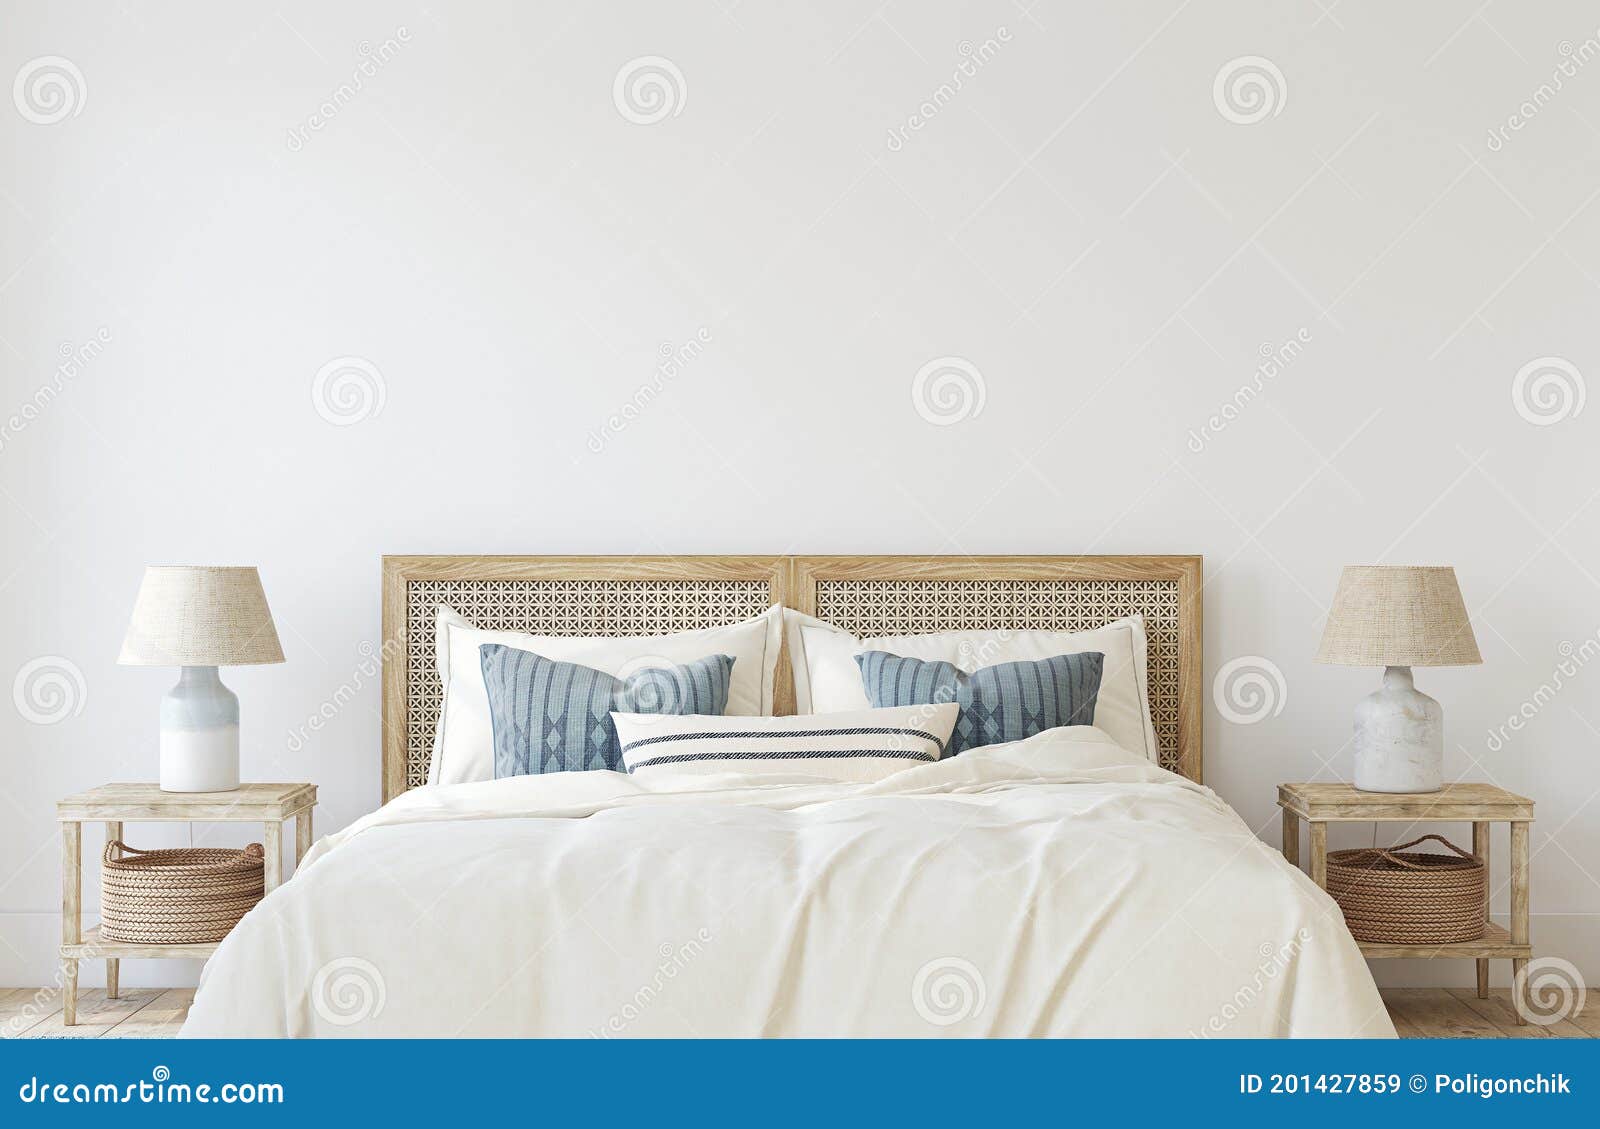 coastal bedroom interior. 3d render